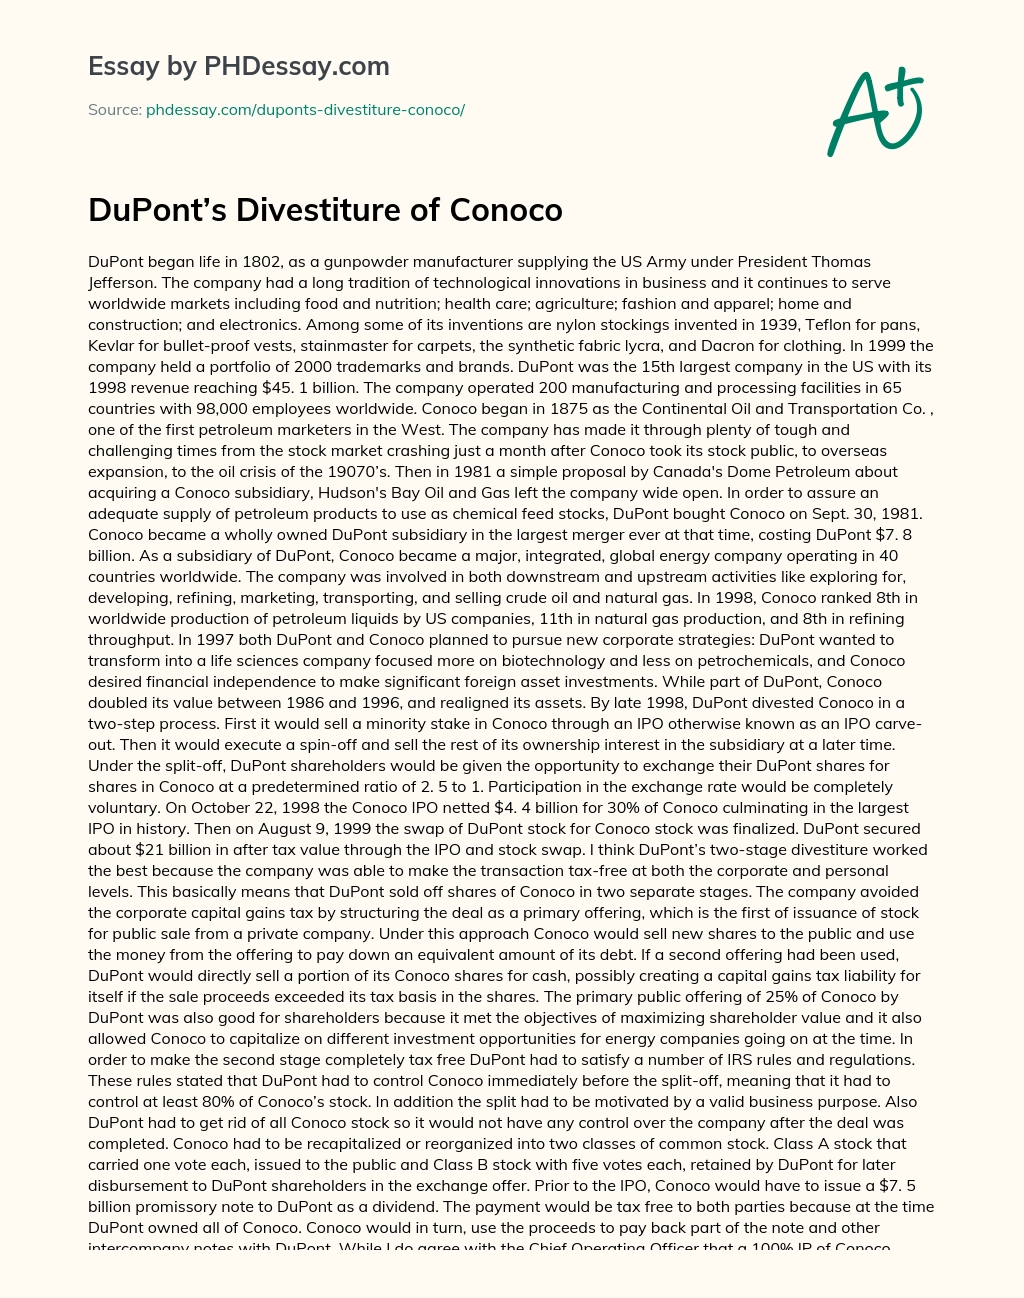 DuPont’s Divestiture of Conoco essay